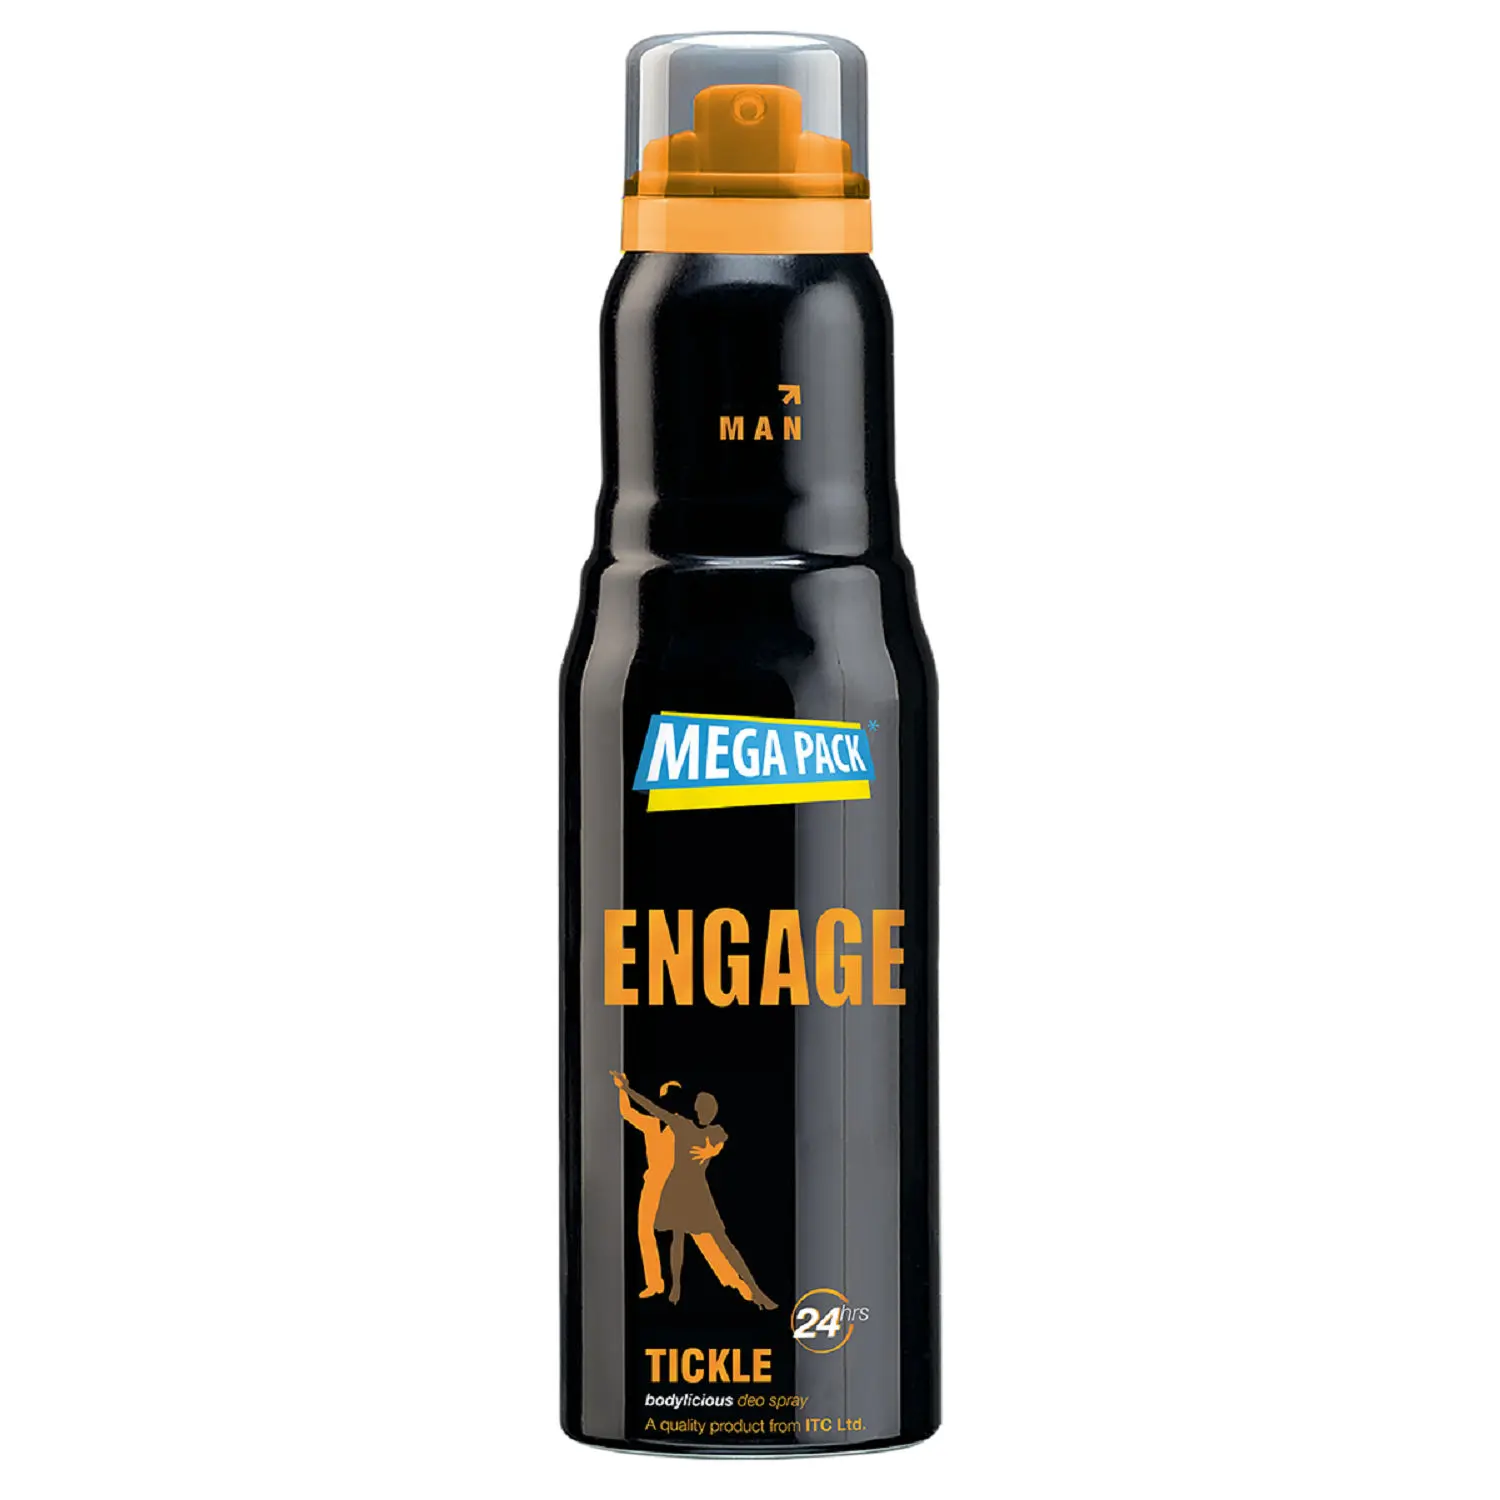 Engage Tickle Deodorant for Men, 220ml